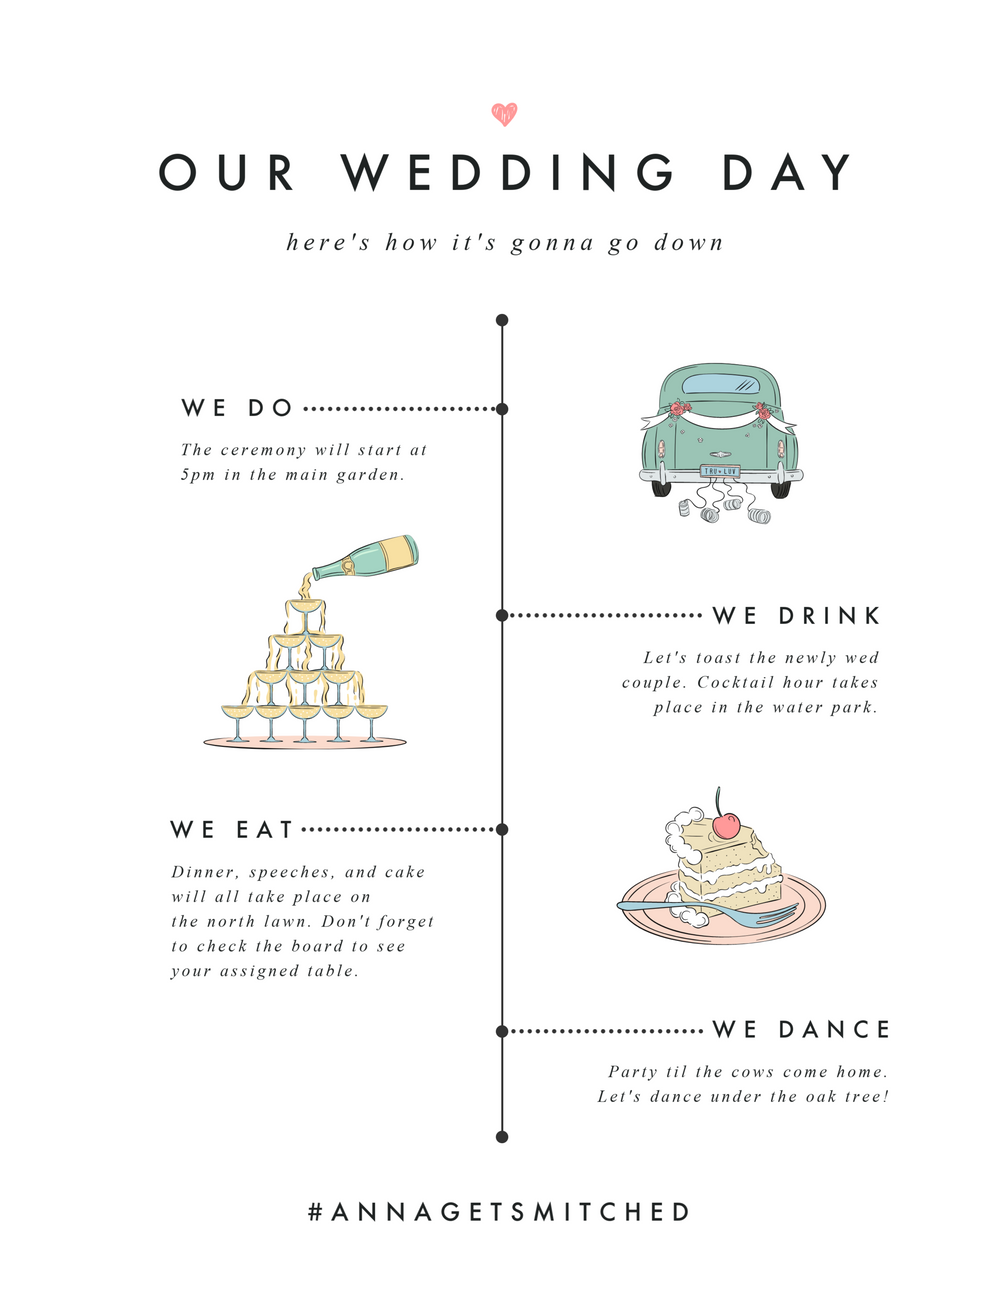 Wedding Day Timeline